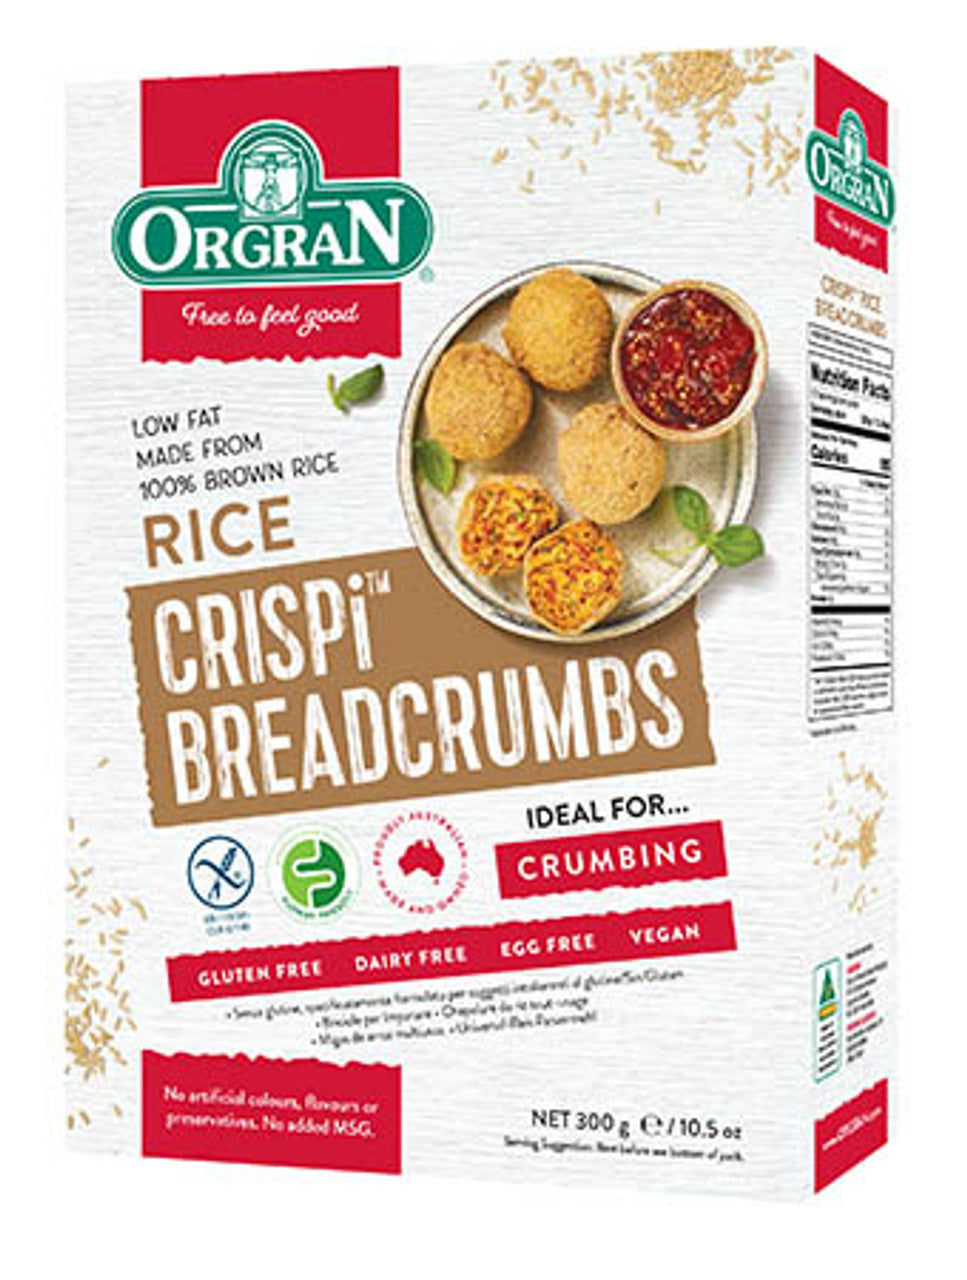 Rice Crispi Breadcrumbs (Rice crumbs) GF 300g Box Organ